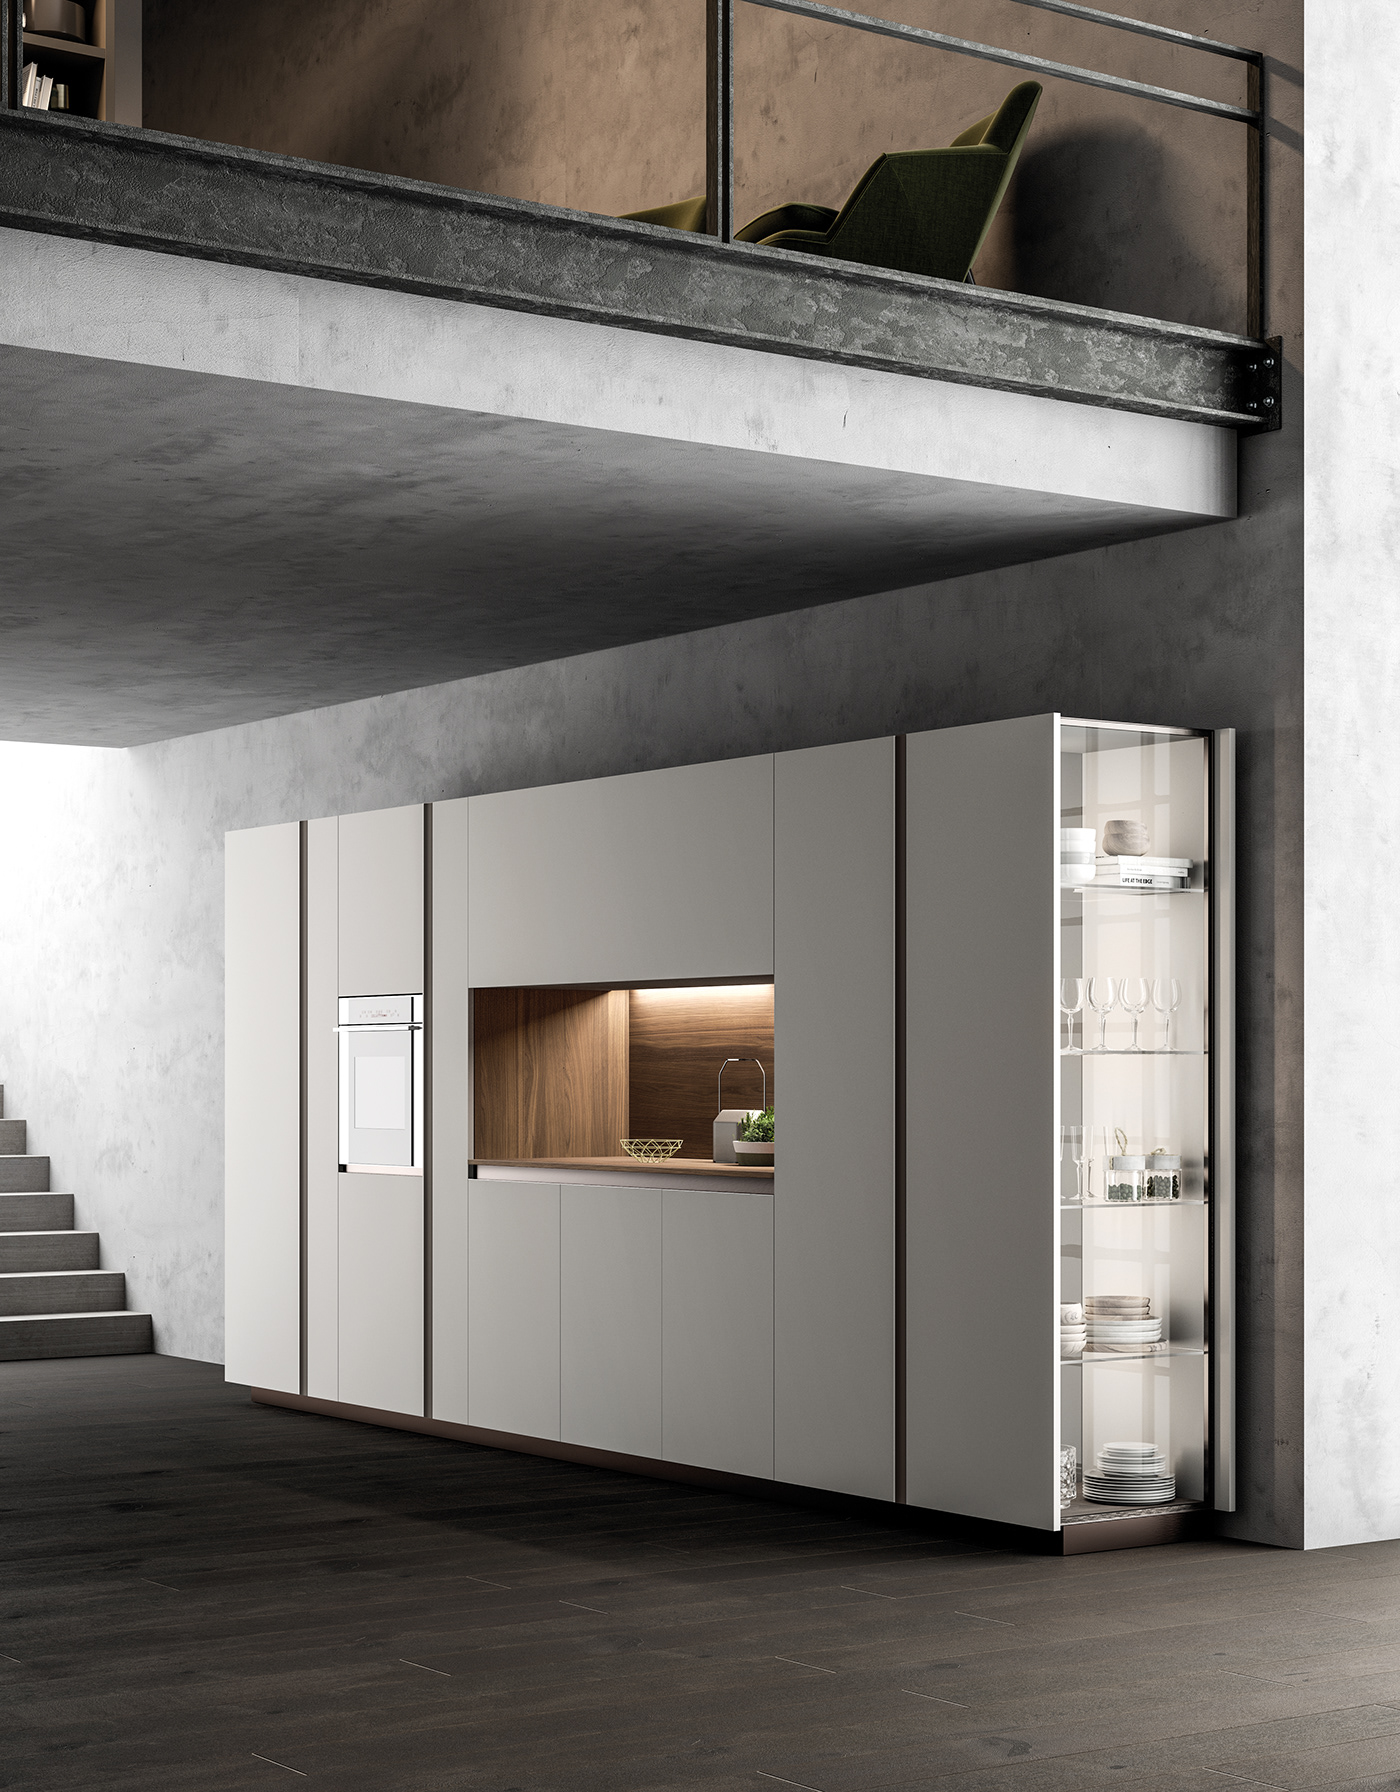 kitchen inspiration Interior design rendering Render arion kitchen 2018 studio podrini Style